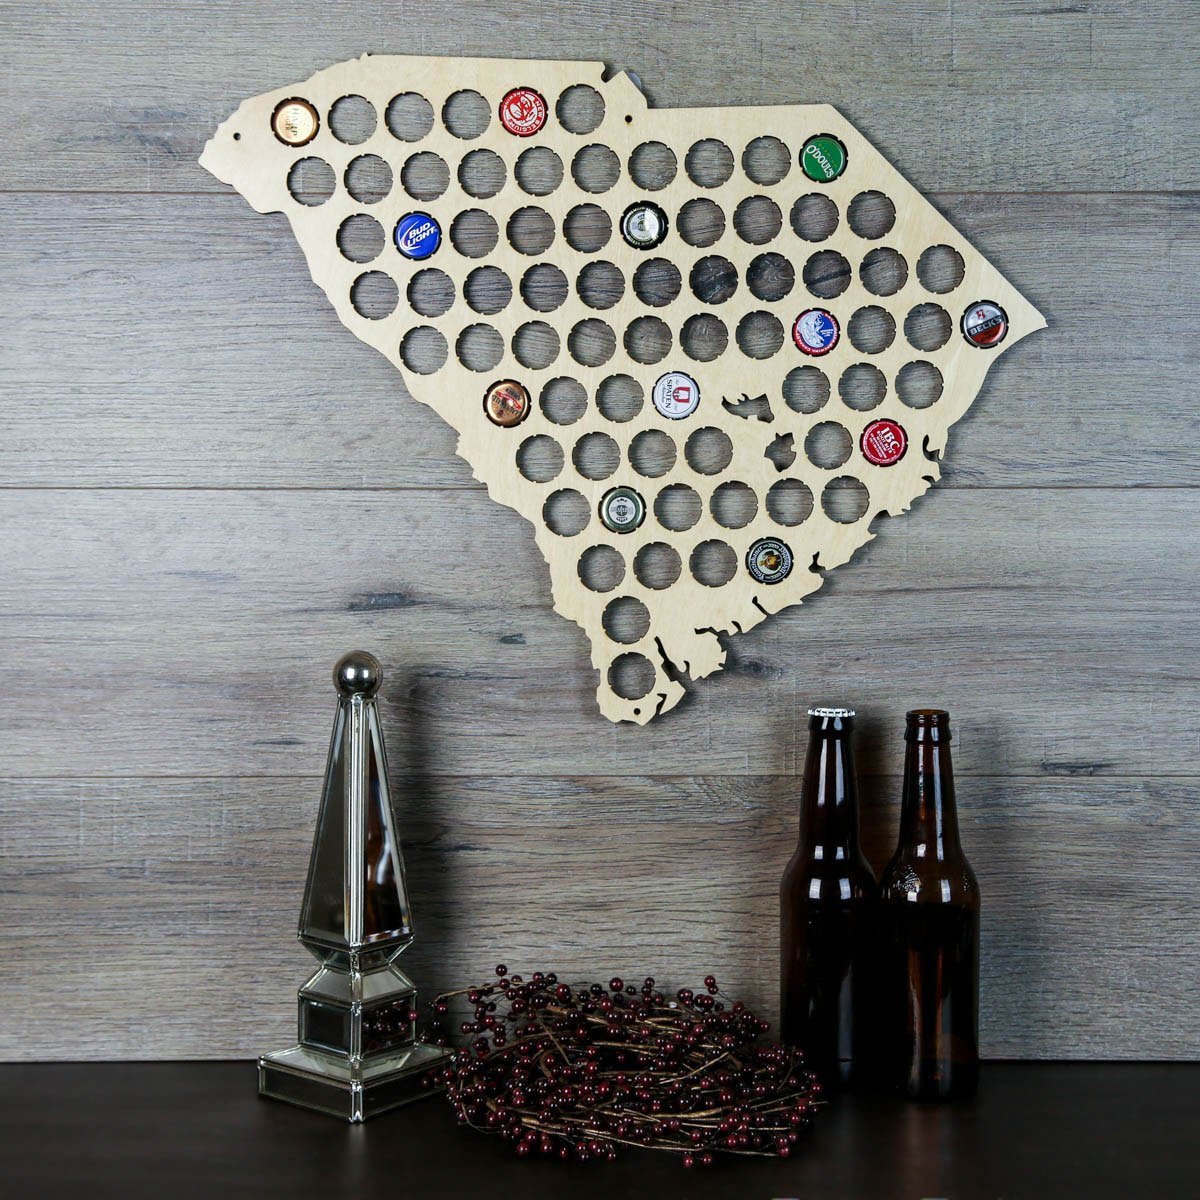 Torched Products Beer Bottle Cap Holder South Carolina Beer Cap Map (777579200629)